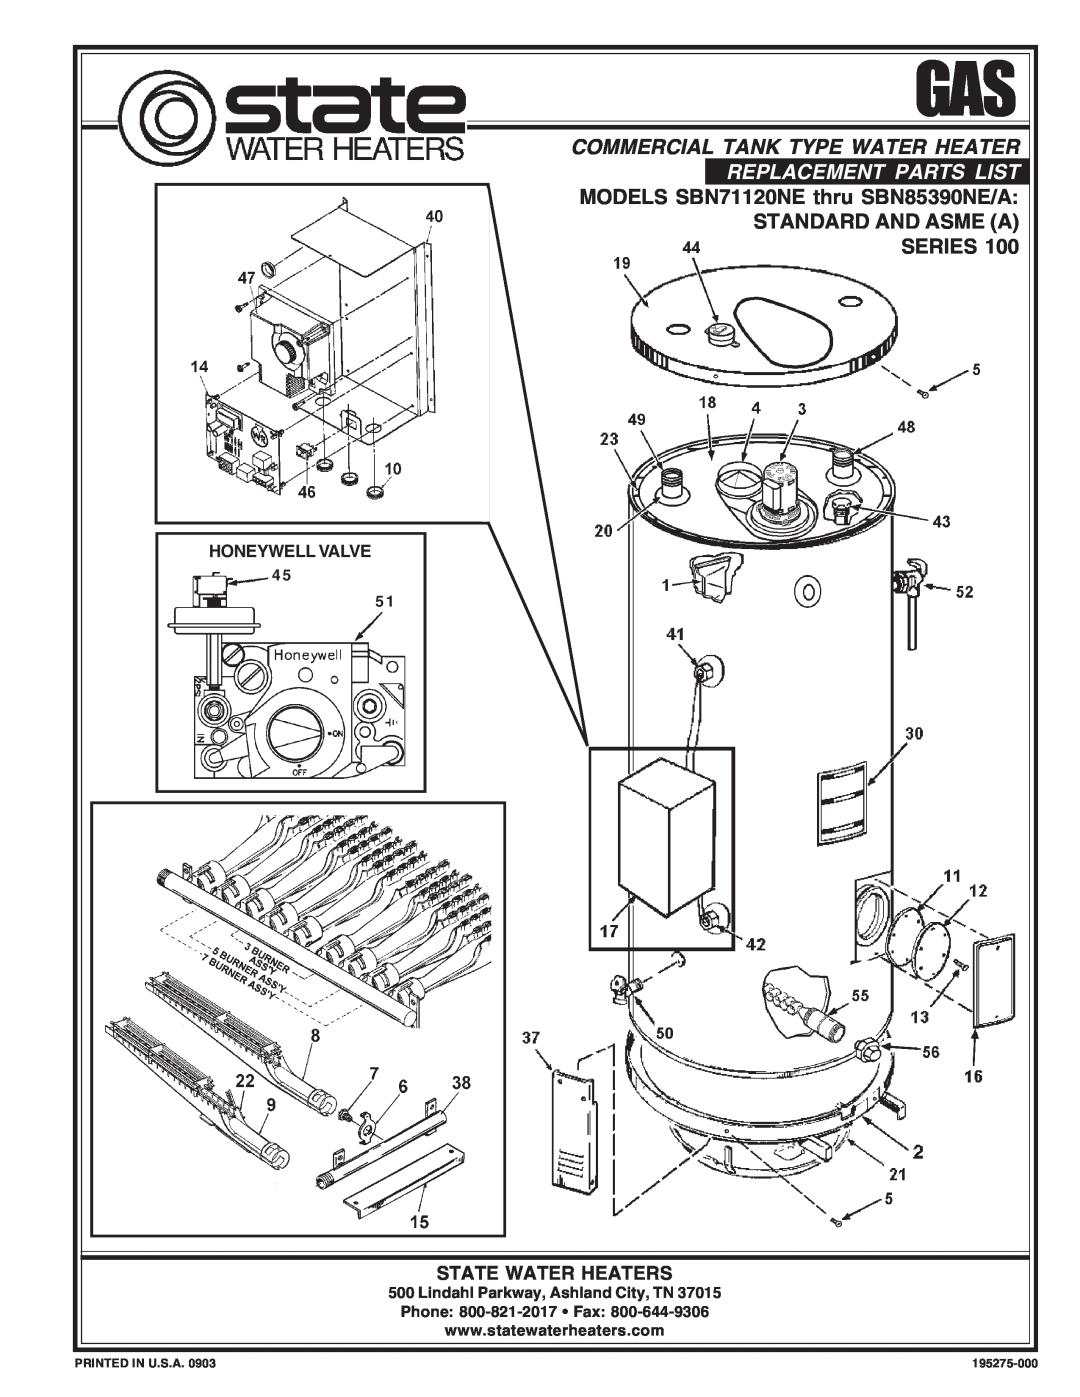 State Industries manual Commercial Tank Type Water Heater, MODELS SBN71120NE thru SBN85390NE/A, Standard And Asme A 